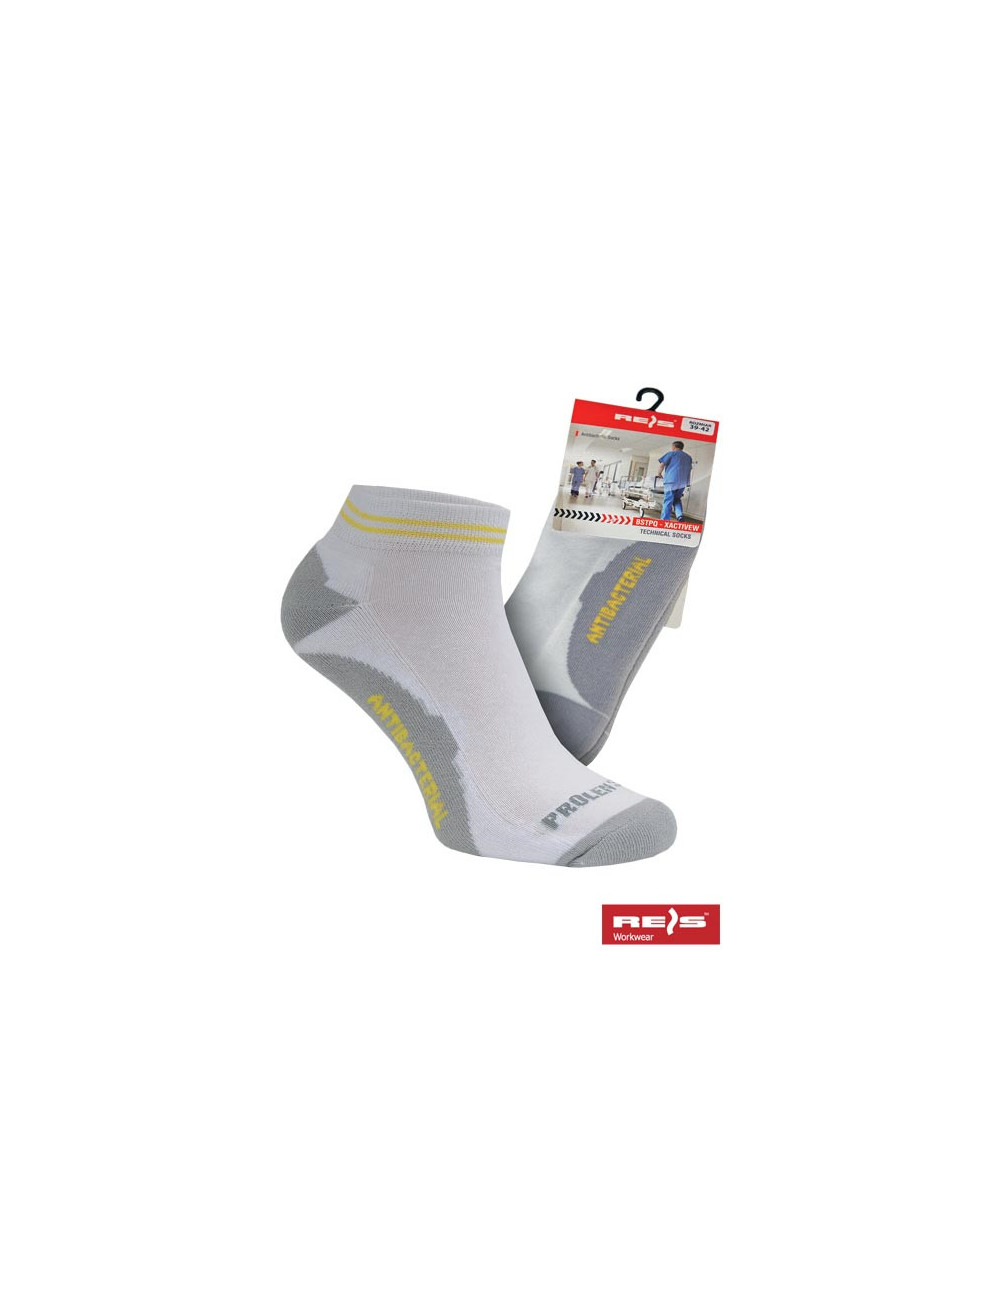 Socks bstpq-xactivew ws white-gray Reis